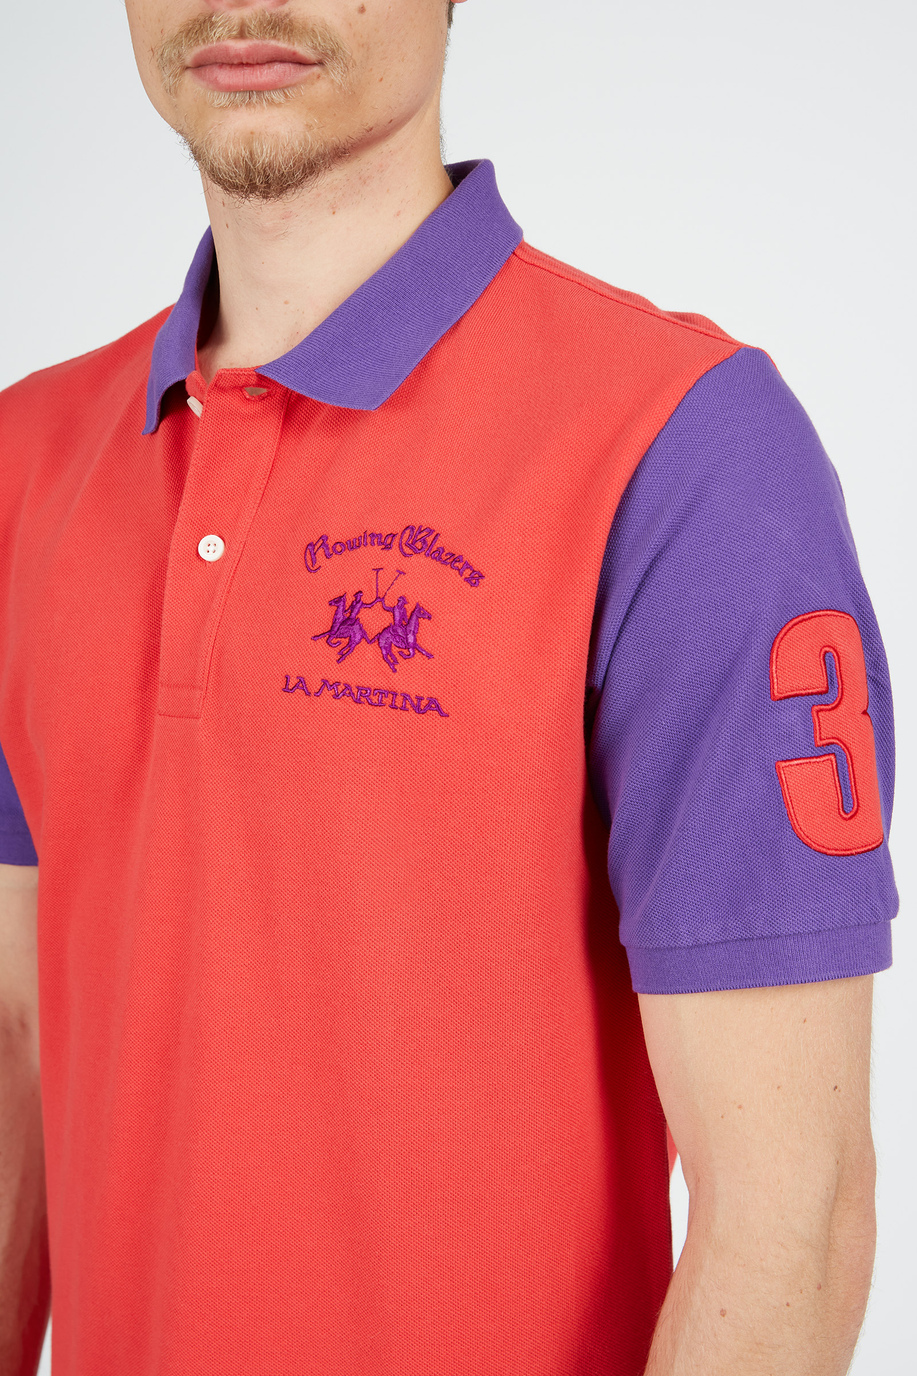 Kurzärmeliges Poloshirt in Komfort-Passform - Poloshirts | La Martina - Official Online Shop